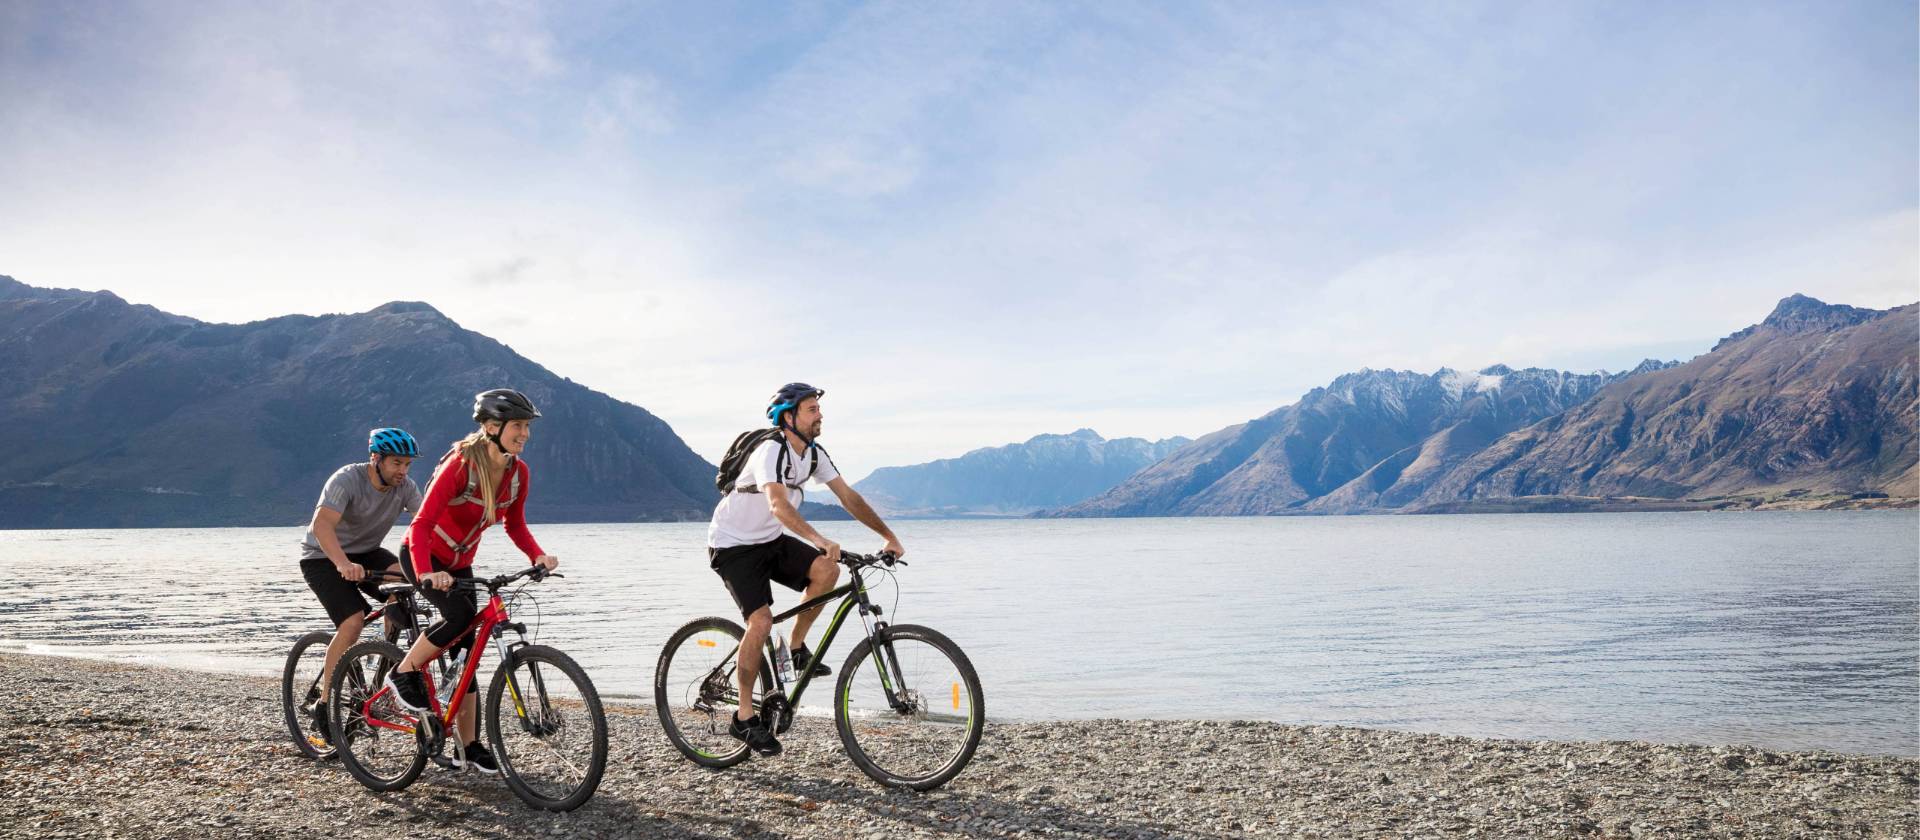 Cycling along the shore front of Lake Wakatipu | Southern Discoveries